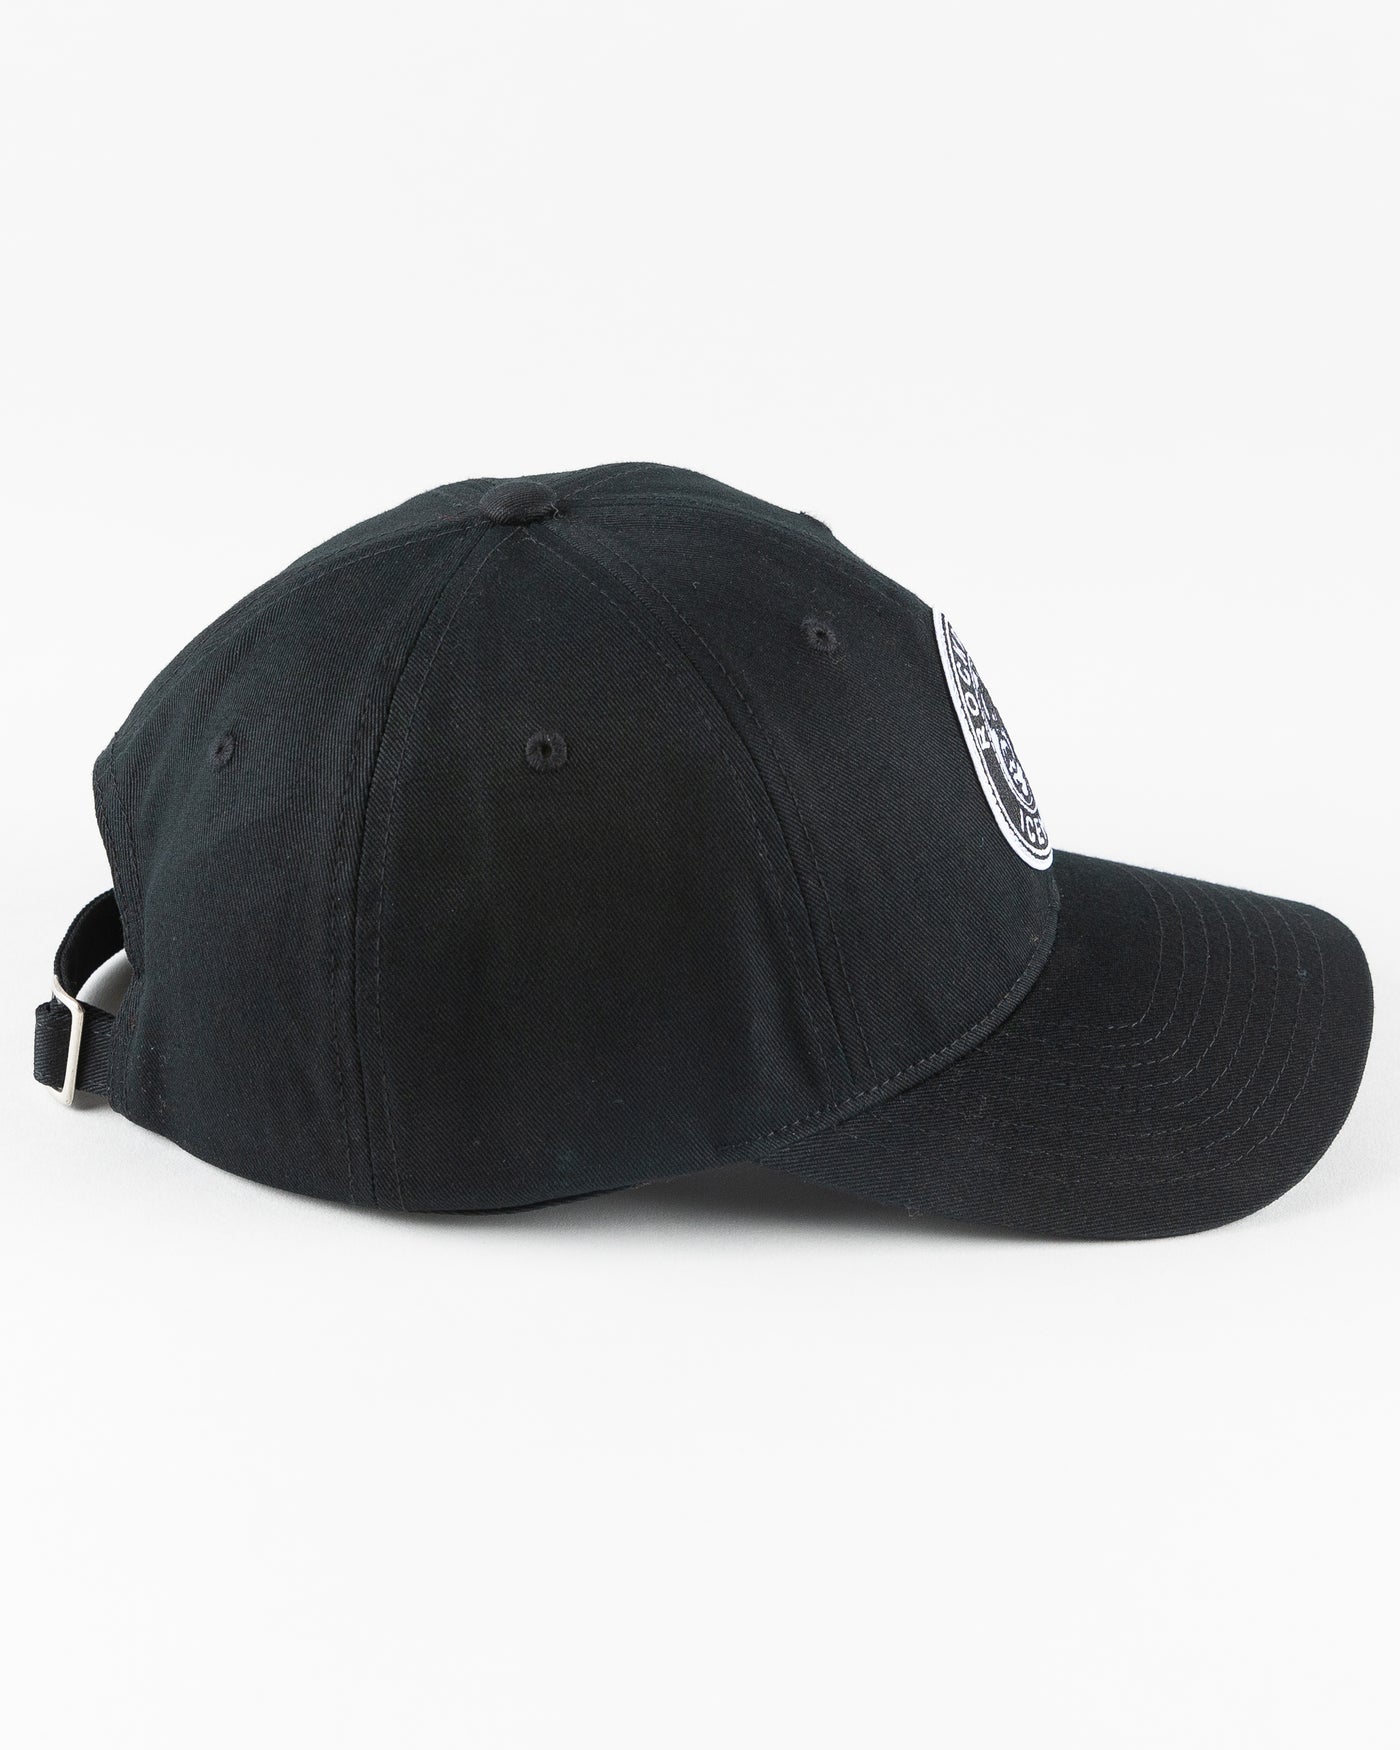 black Rockford IceHogs CCM baseball cap - right angle lay flat